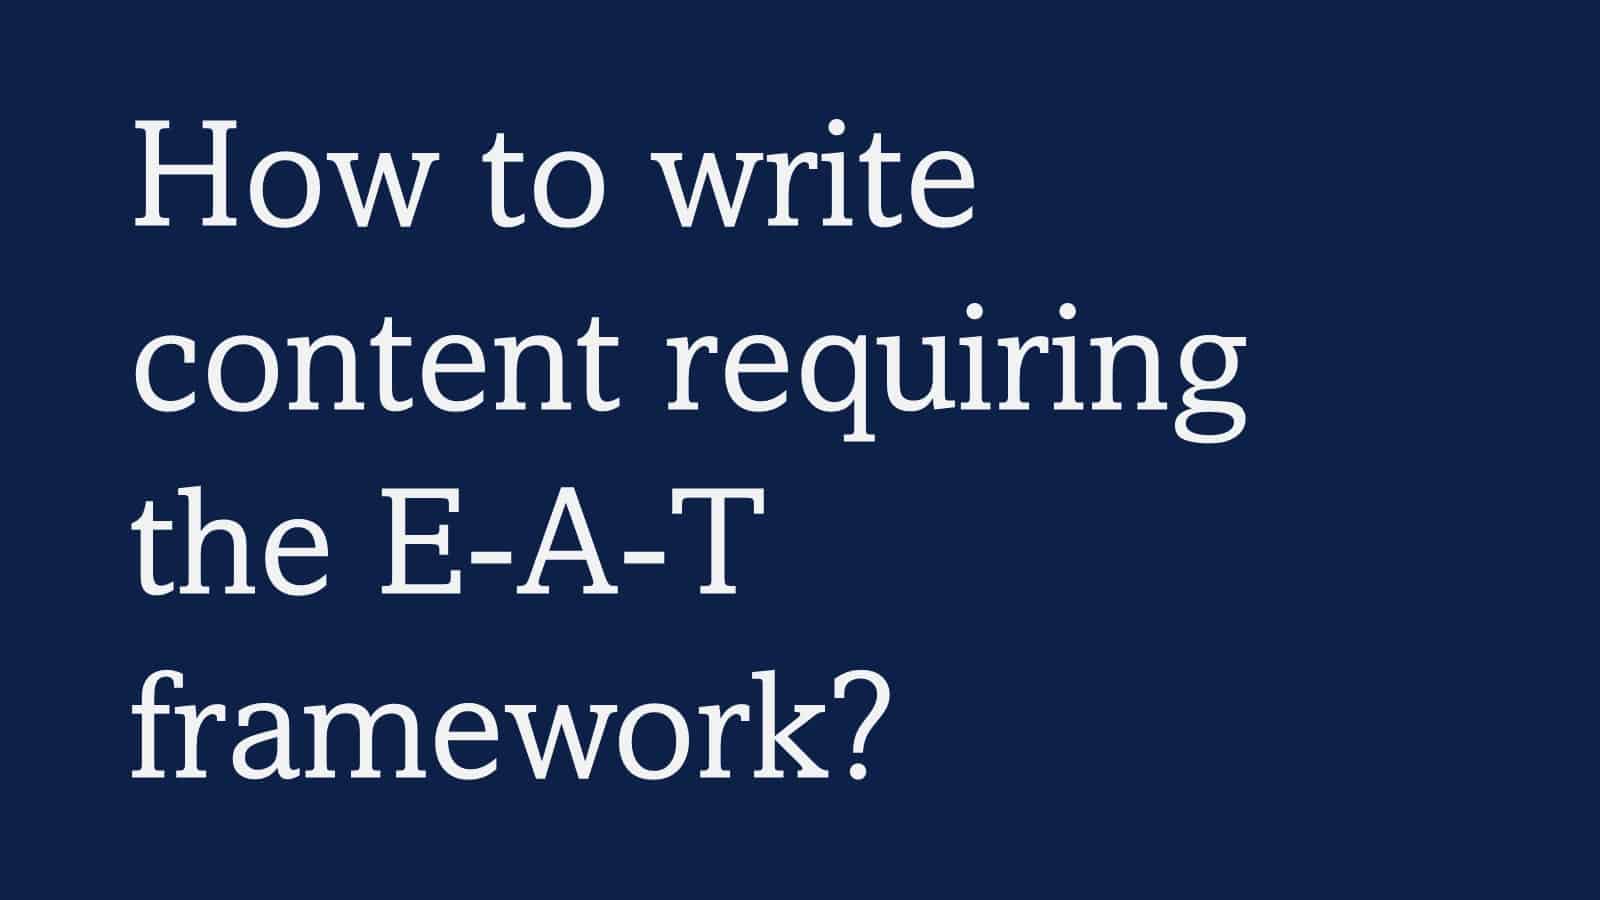 How to write content requiring the E-A-T framework